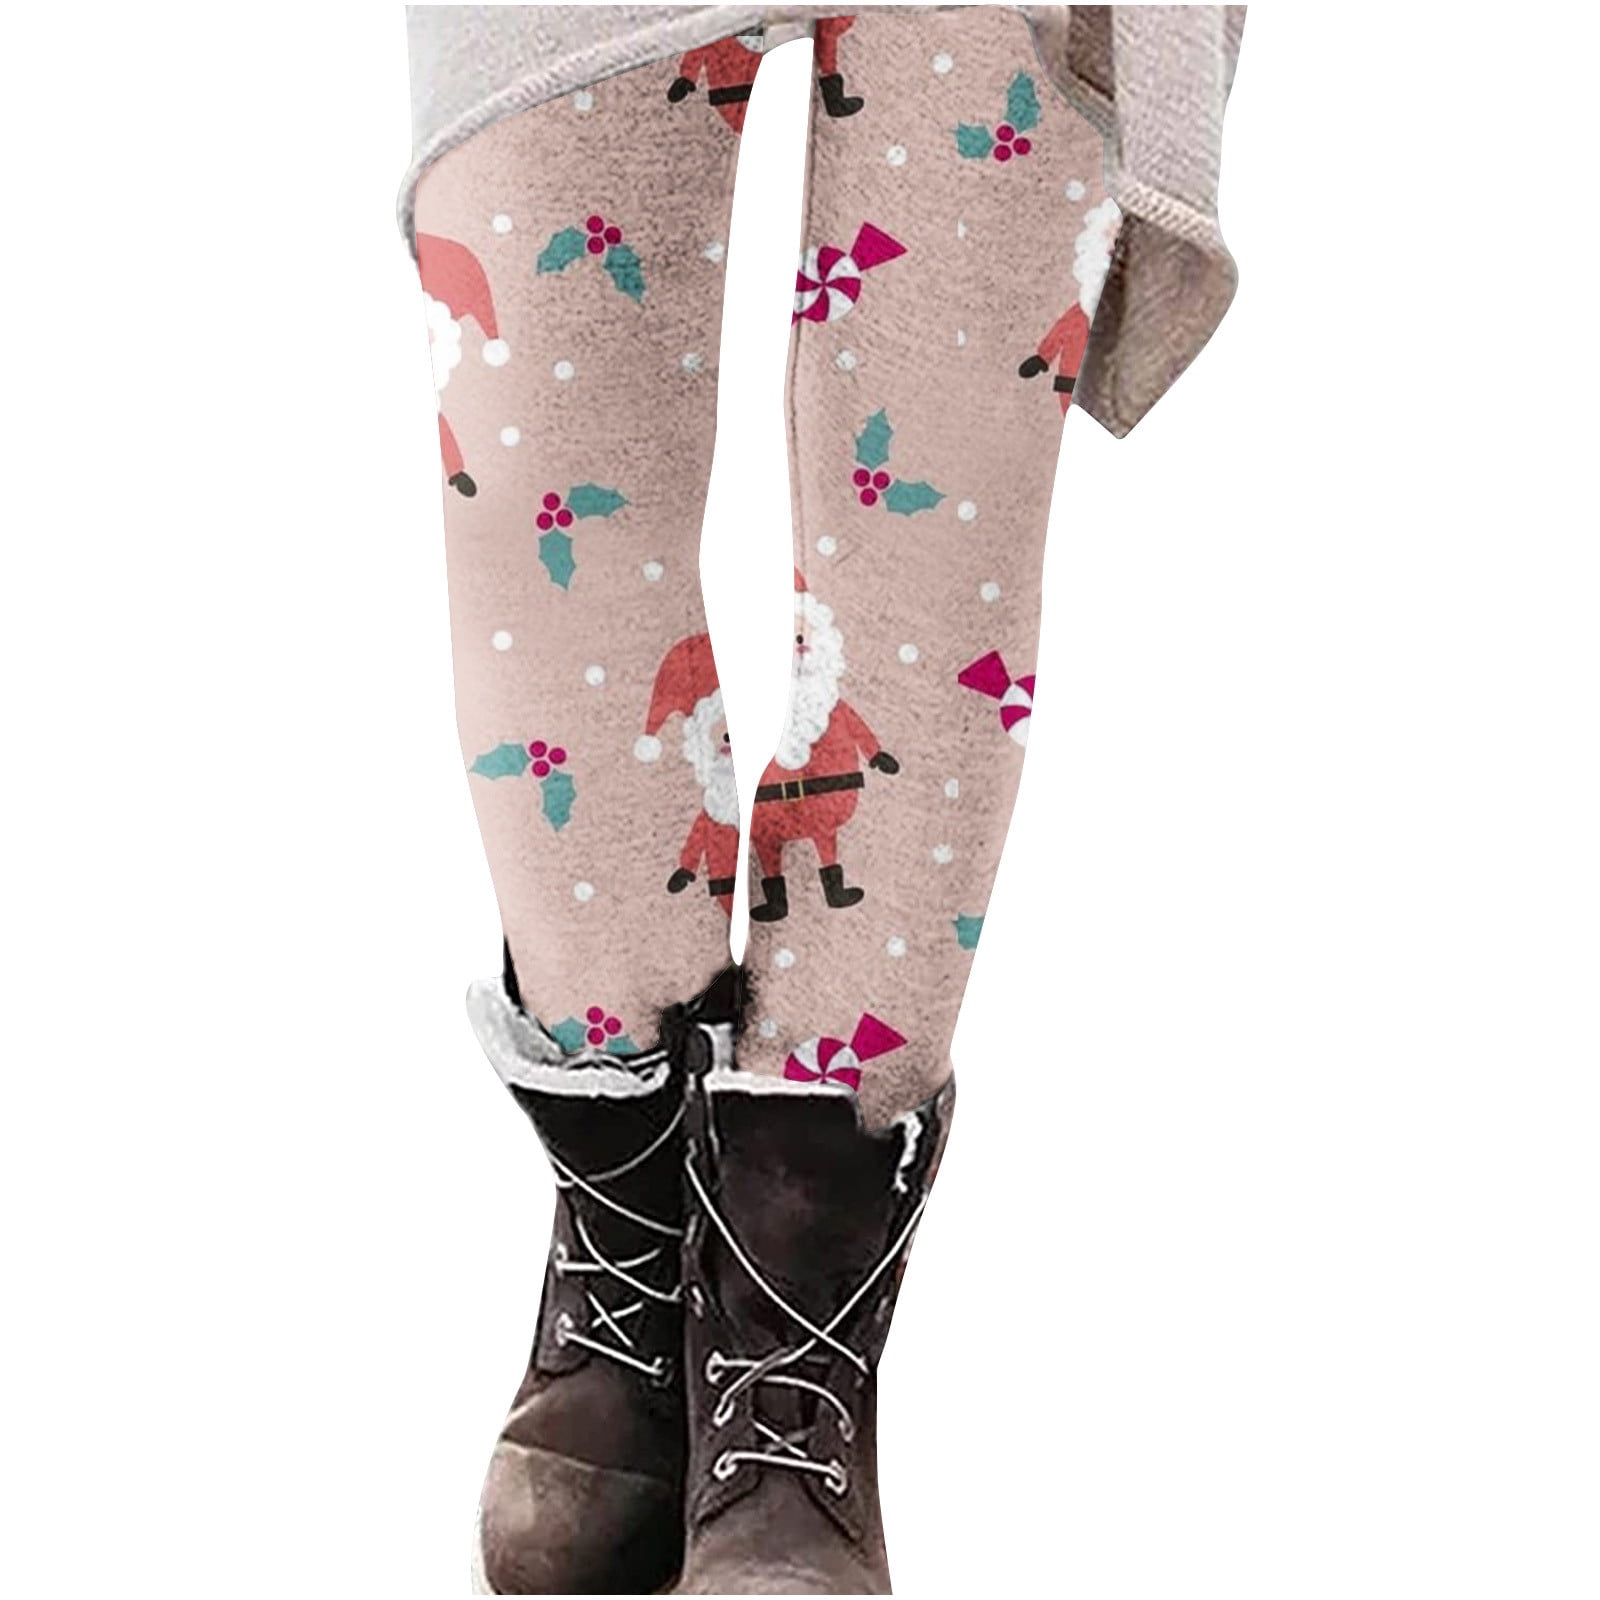 Cheri Fit - Falling Snow Leggings available on cherifit.com in M, L, XL &  2XL 👏🏼 ✨⠀⠀⠀⠀⠀⠀⠀⠀⠀ ⠀⠀⠀⠀⠀⠀⠀⠀⠀ Tori is wearing a size medium 💕⠀⠀⠀⠀⠀⠀⠀⠀⠀  ⠀⠀⠀⠀⠀⠀⠀⠀⠀ #CheriFit #ActiveWear